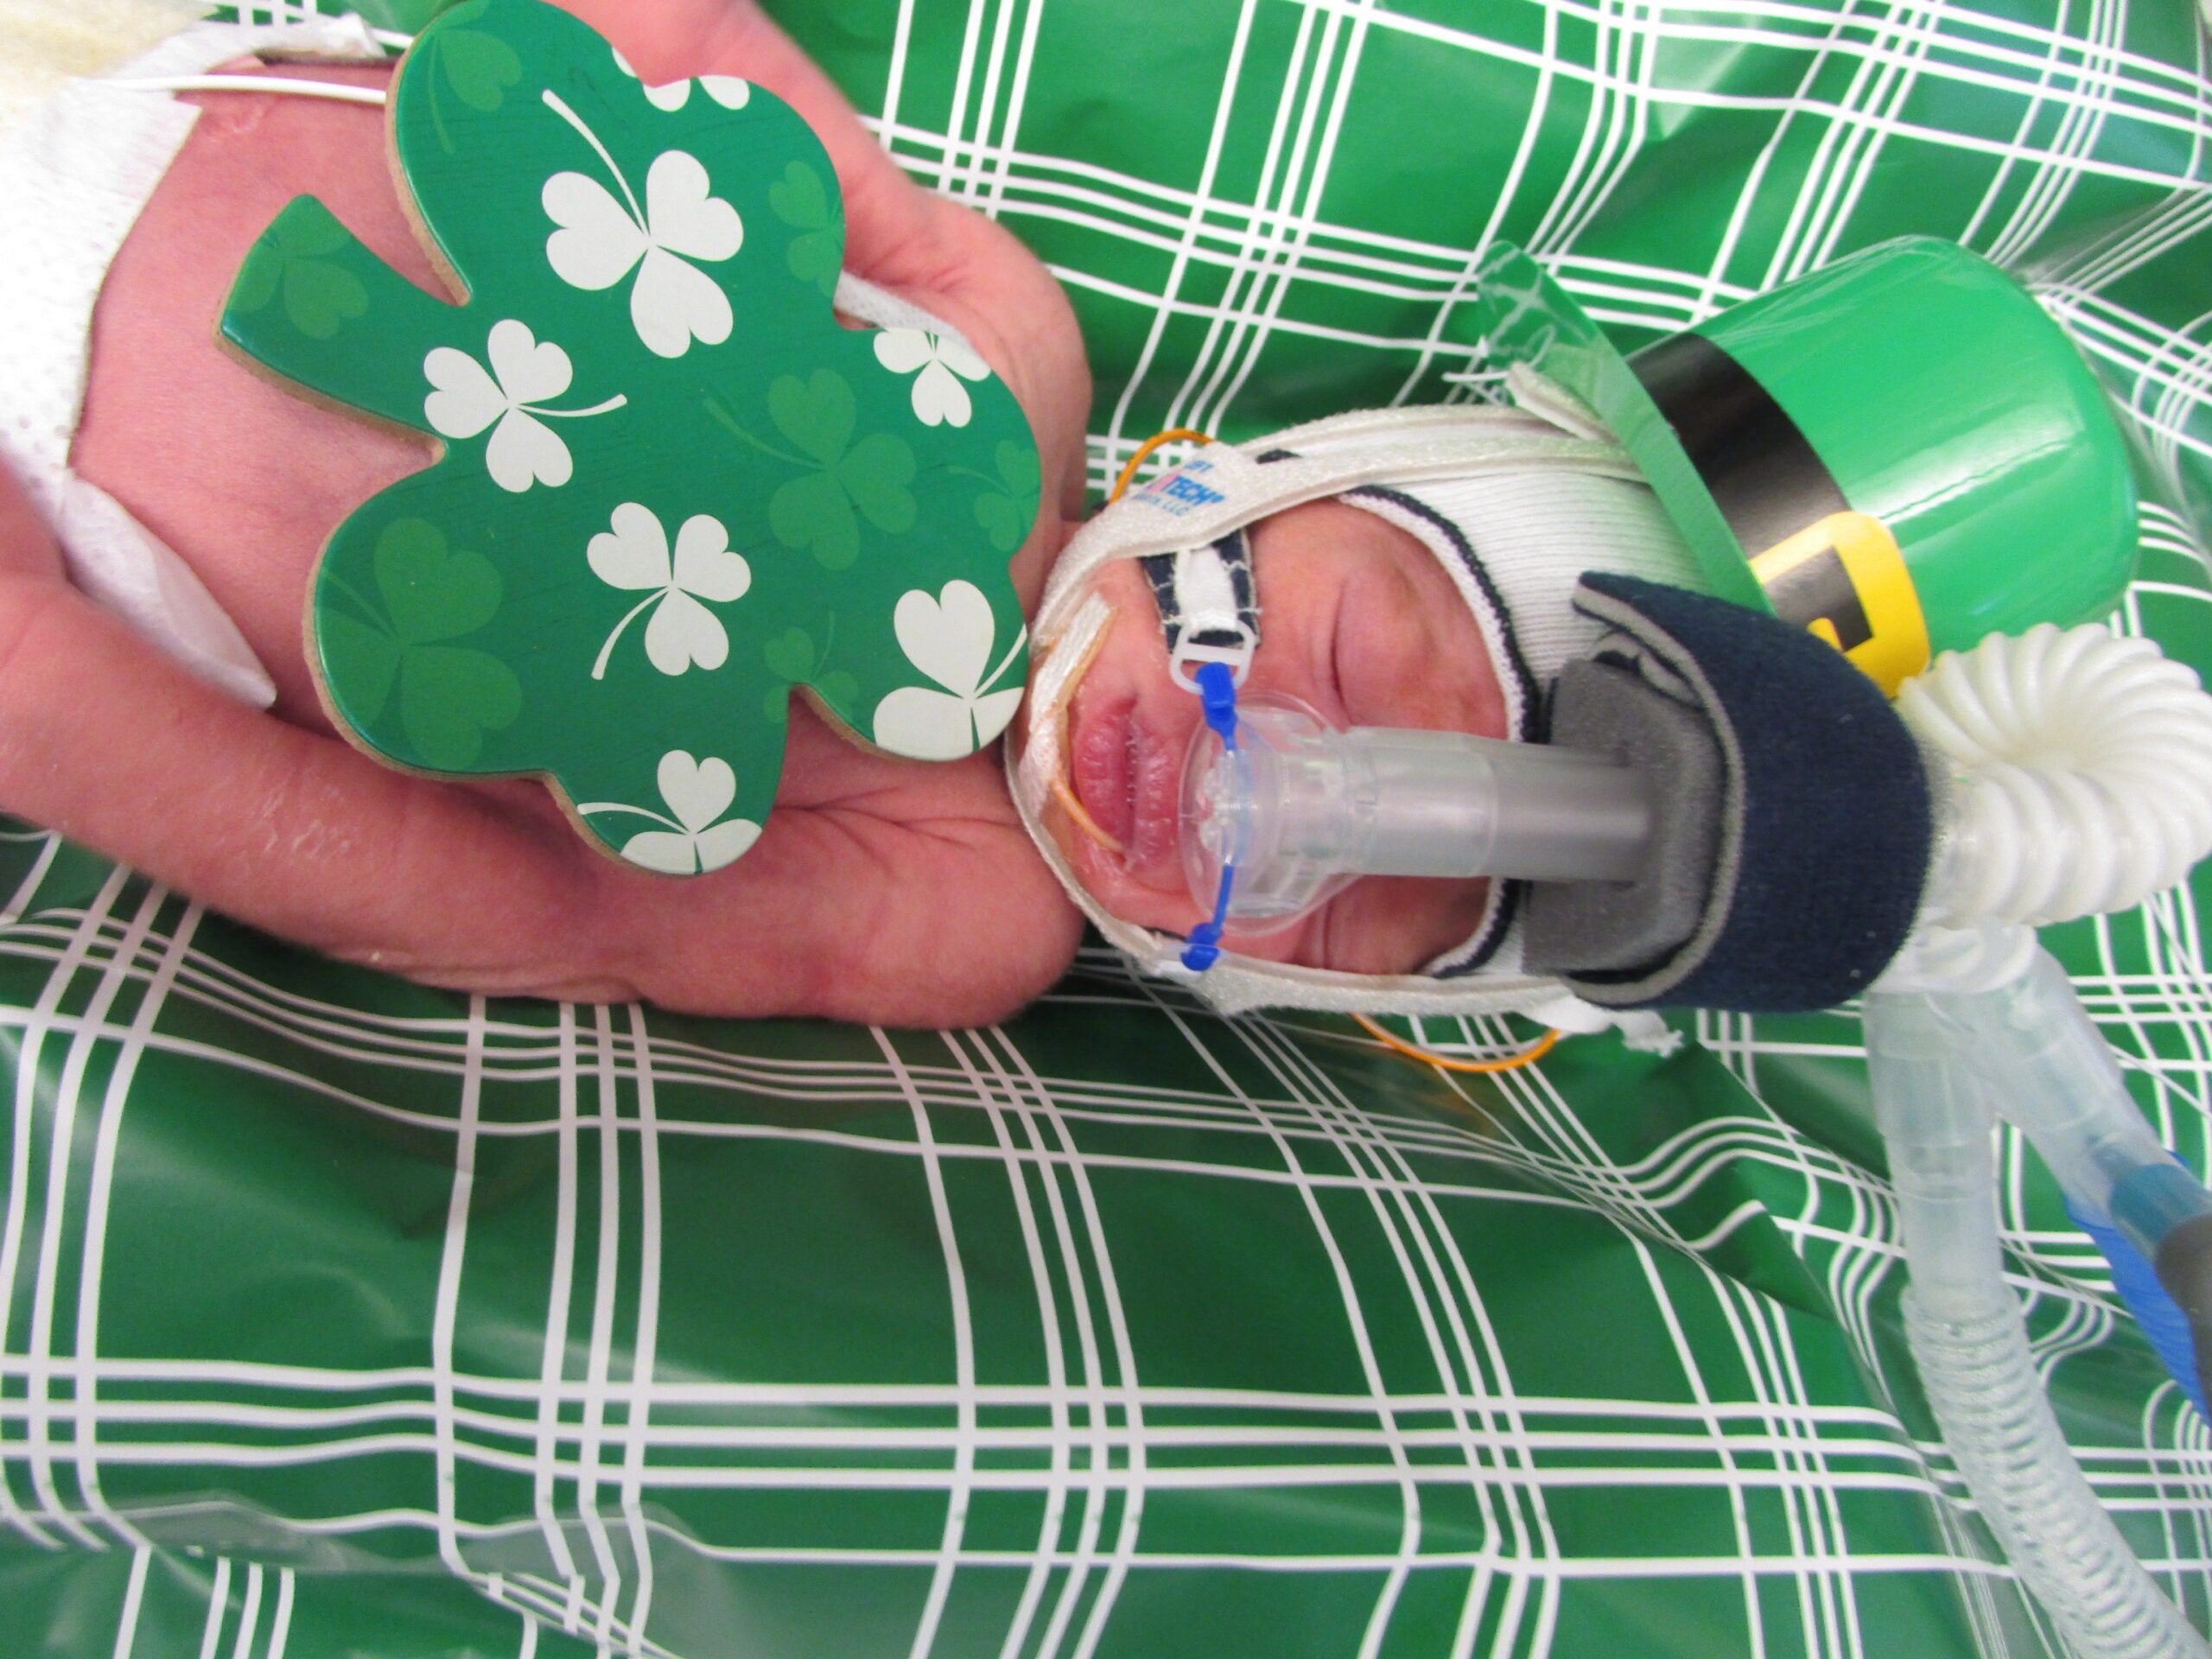 Tufts Medical Center NICU Babies Celebrate St. Patrick's Day